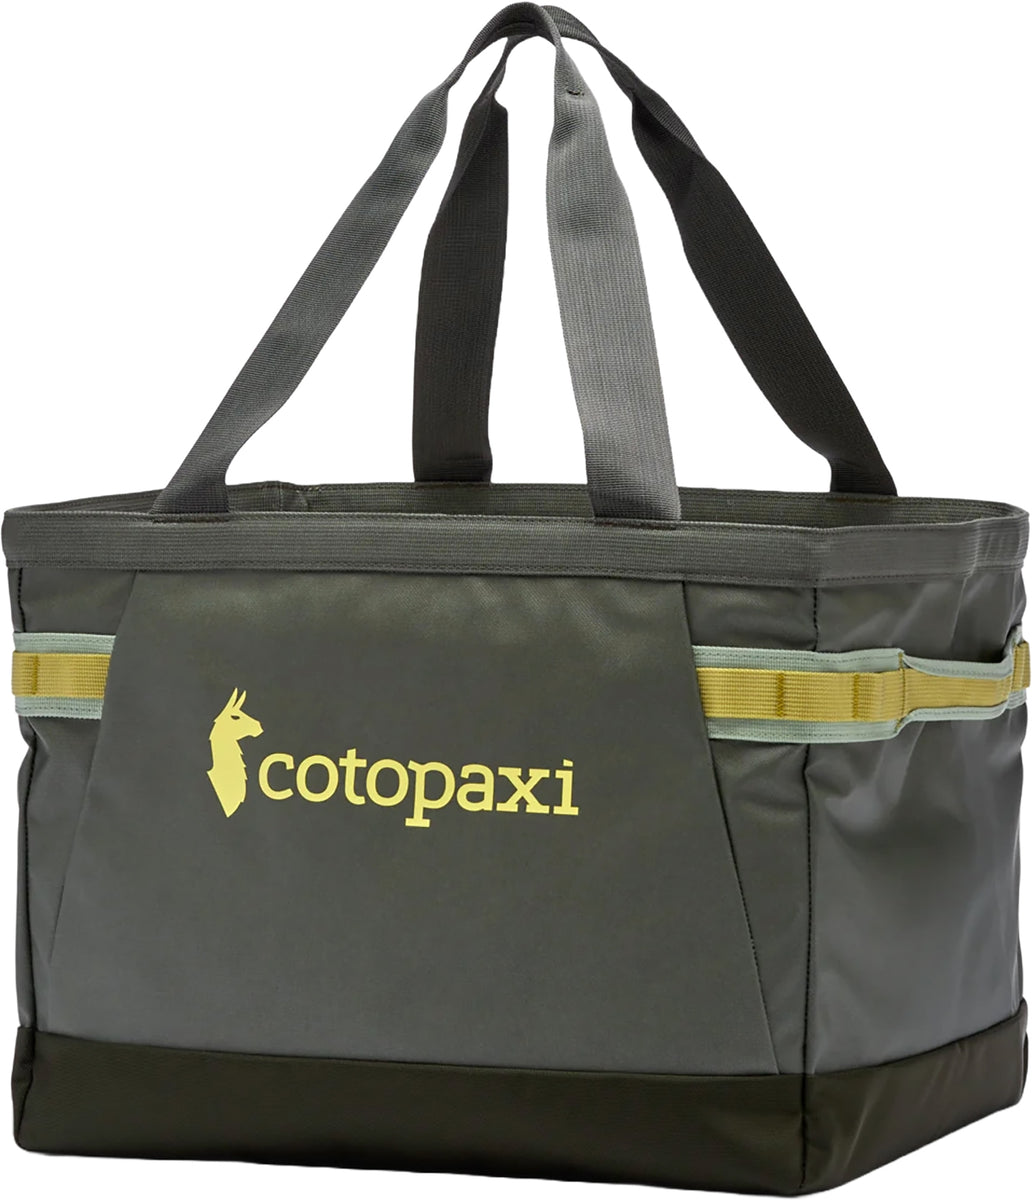 Cotopaxi Allpa 60L Gear Hauler Tote Bag | Altitude Sports